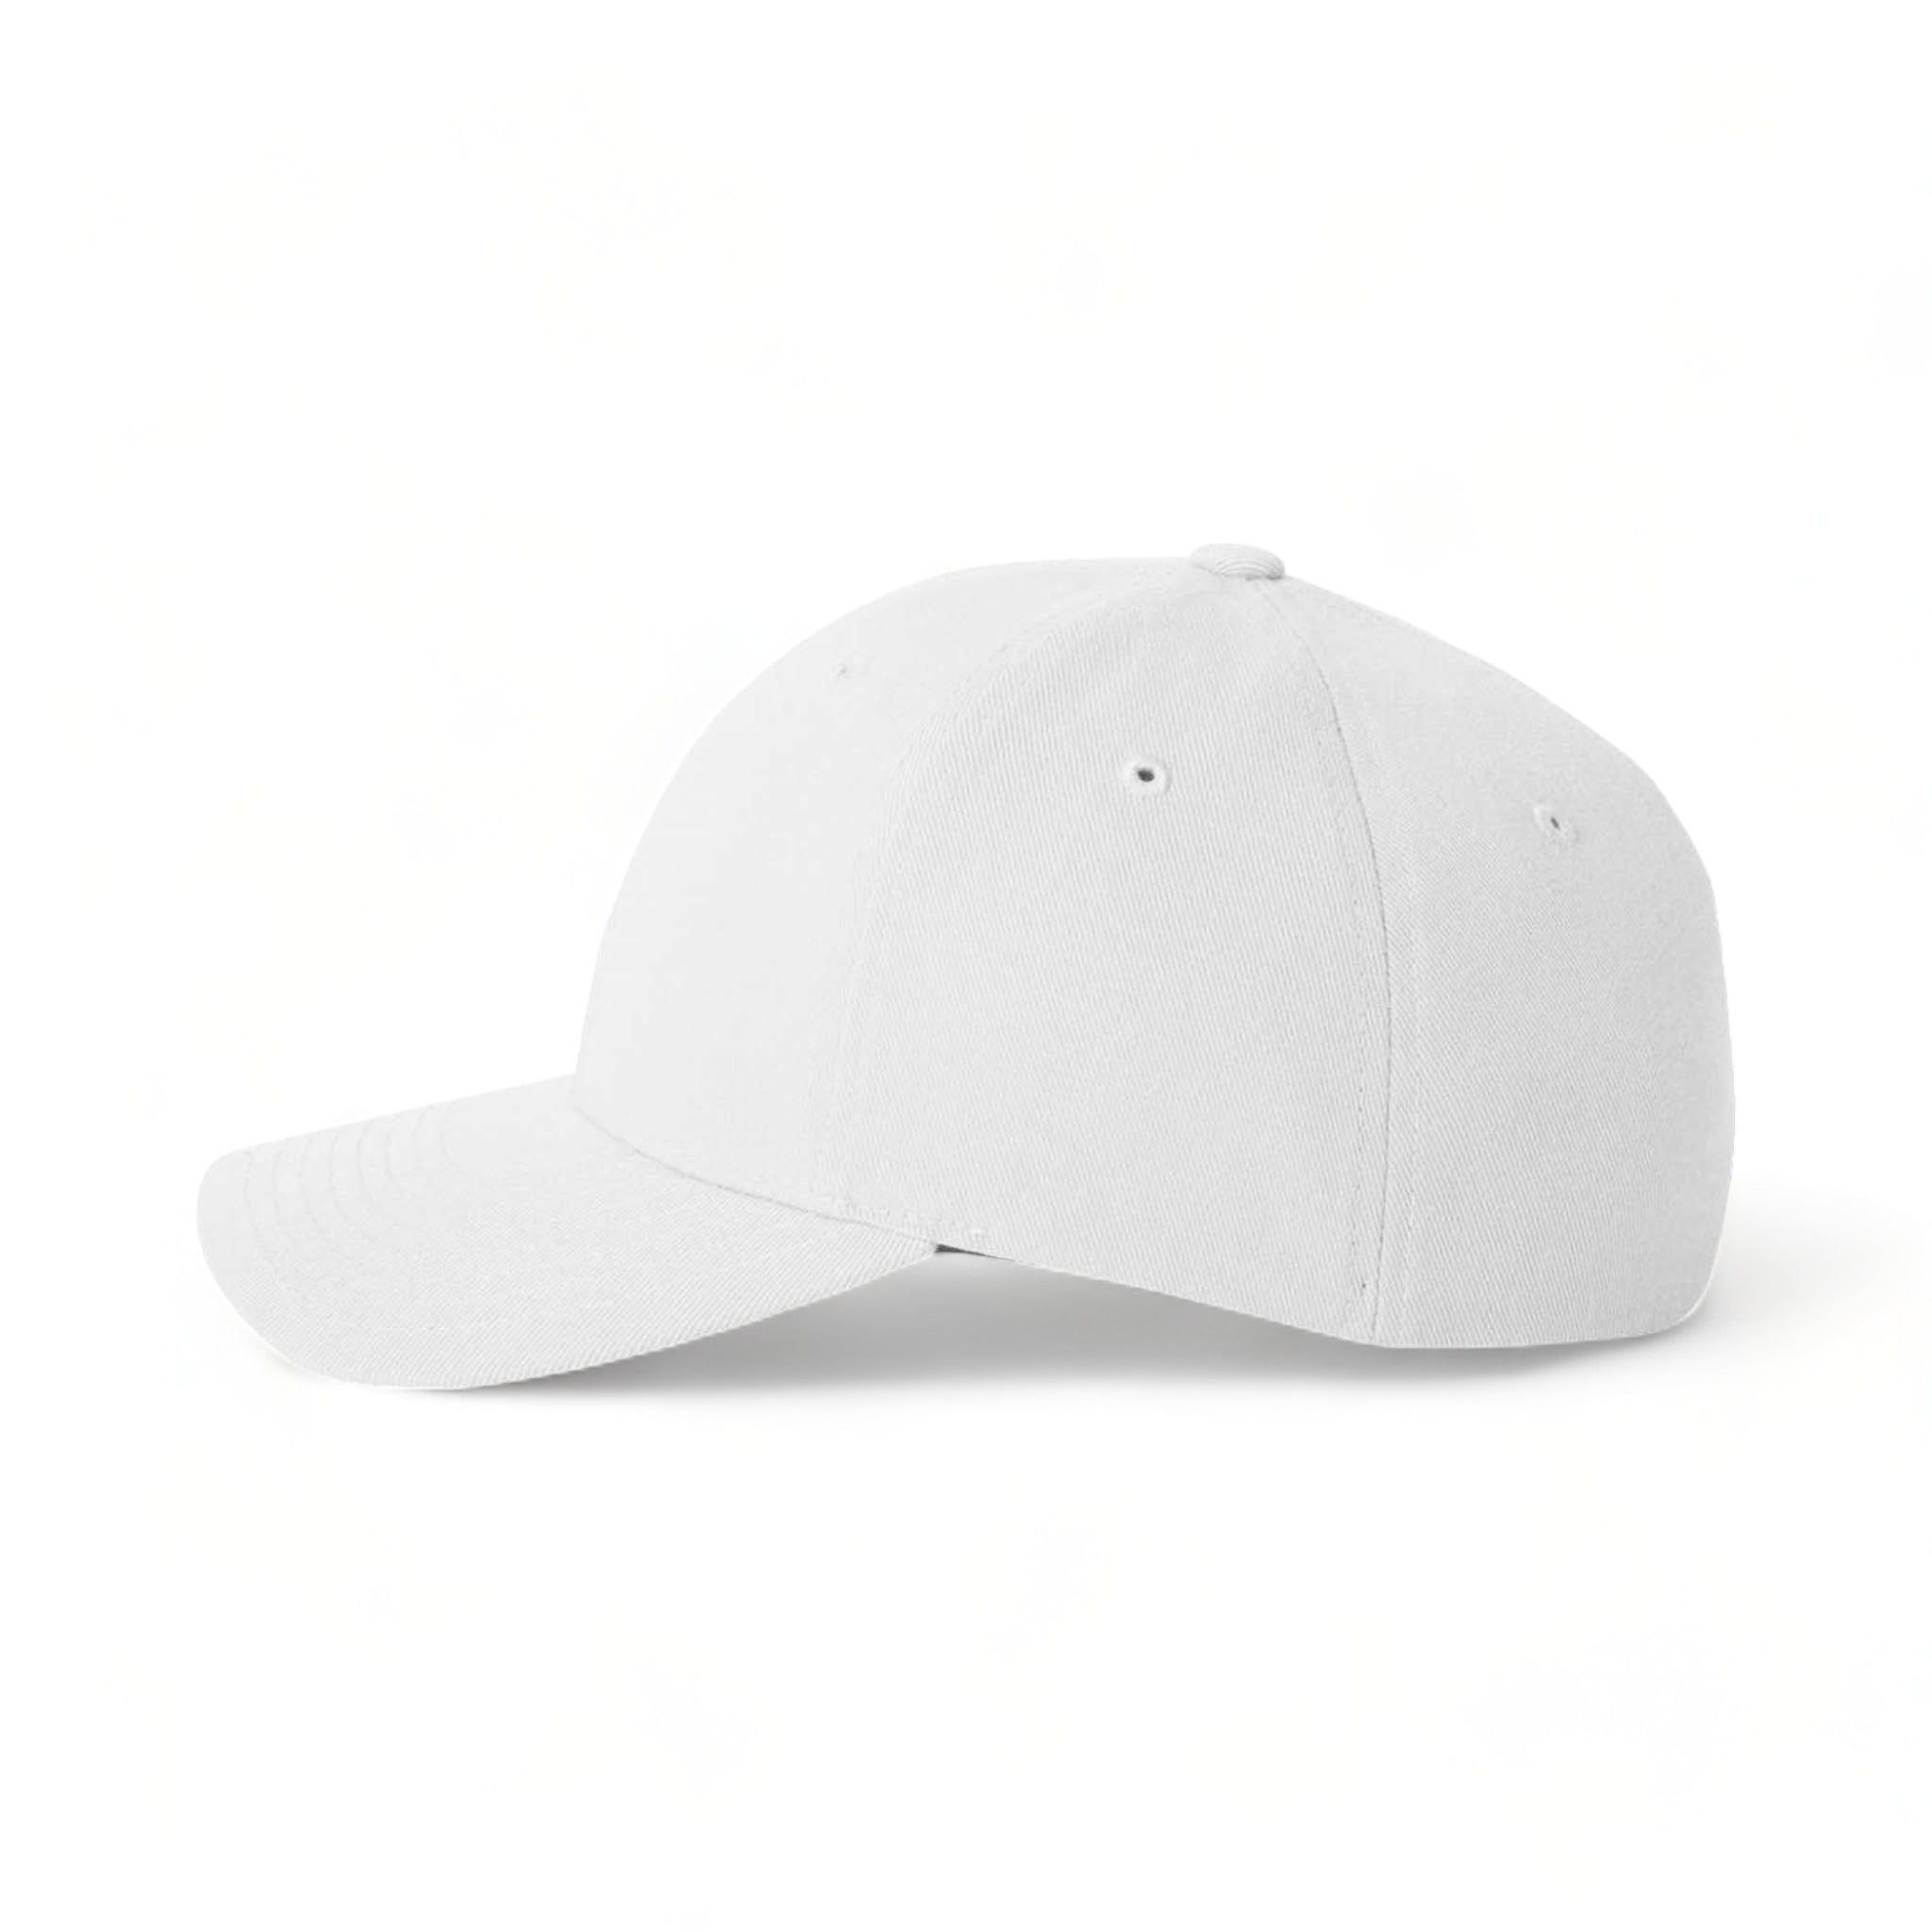 Side view of Flexfit 6580 custom hat in white